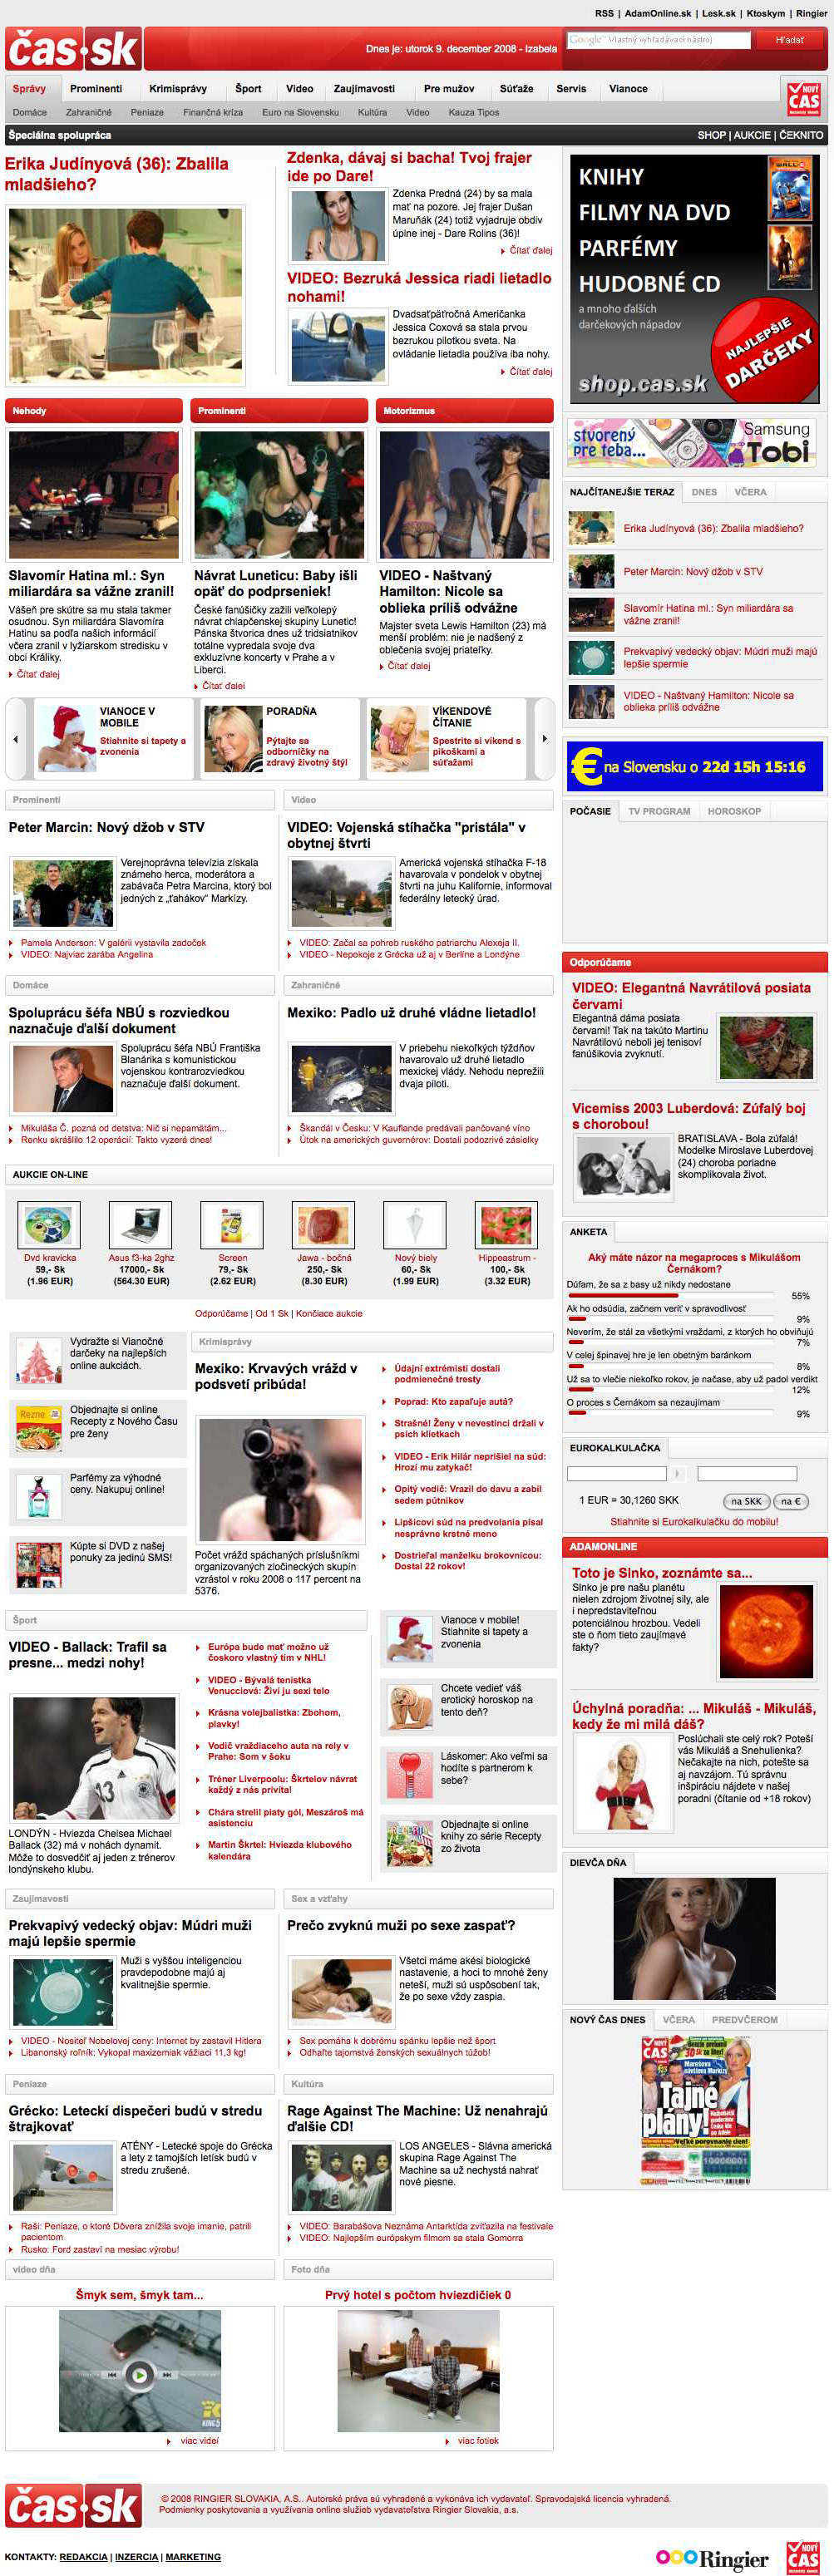 cas.sk titulka od decembra 2008